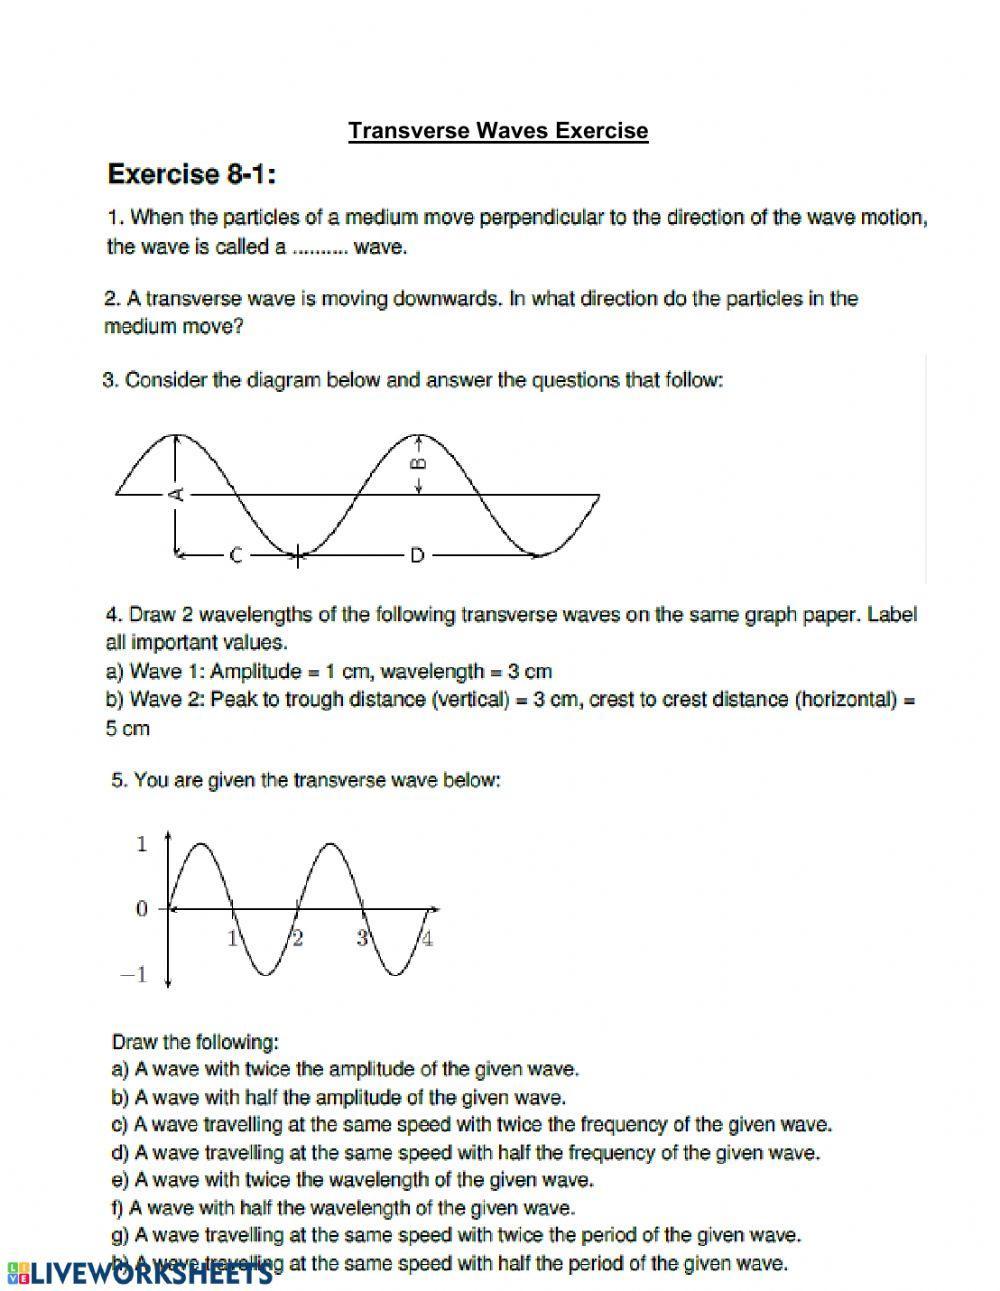 Waves 3: Pulse & Transverse Waves Exercises